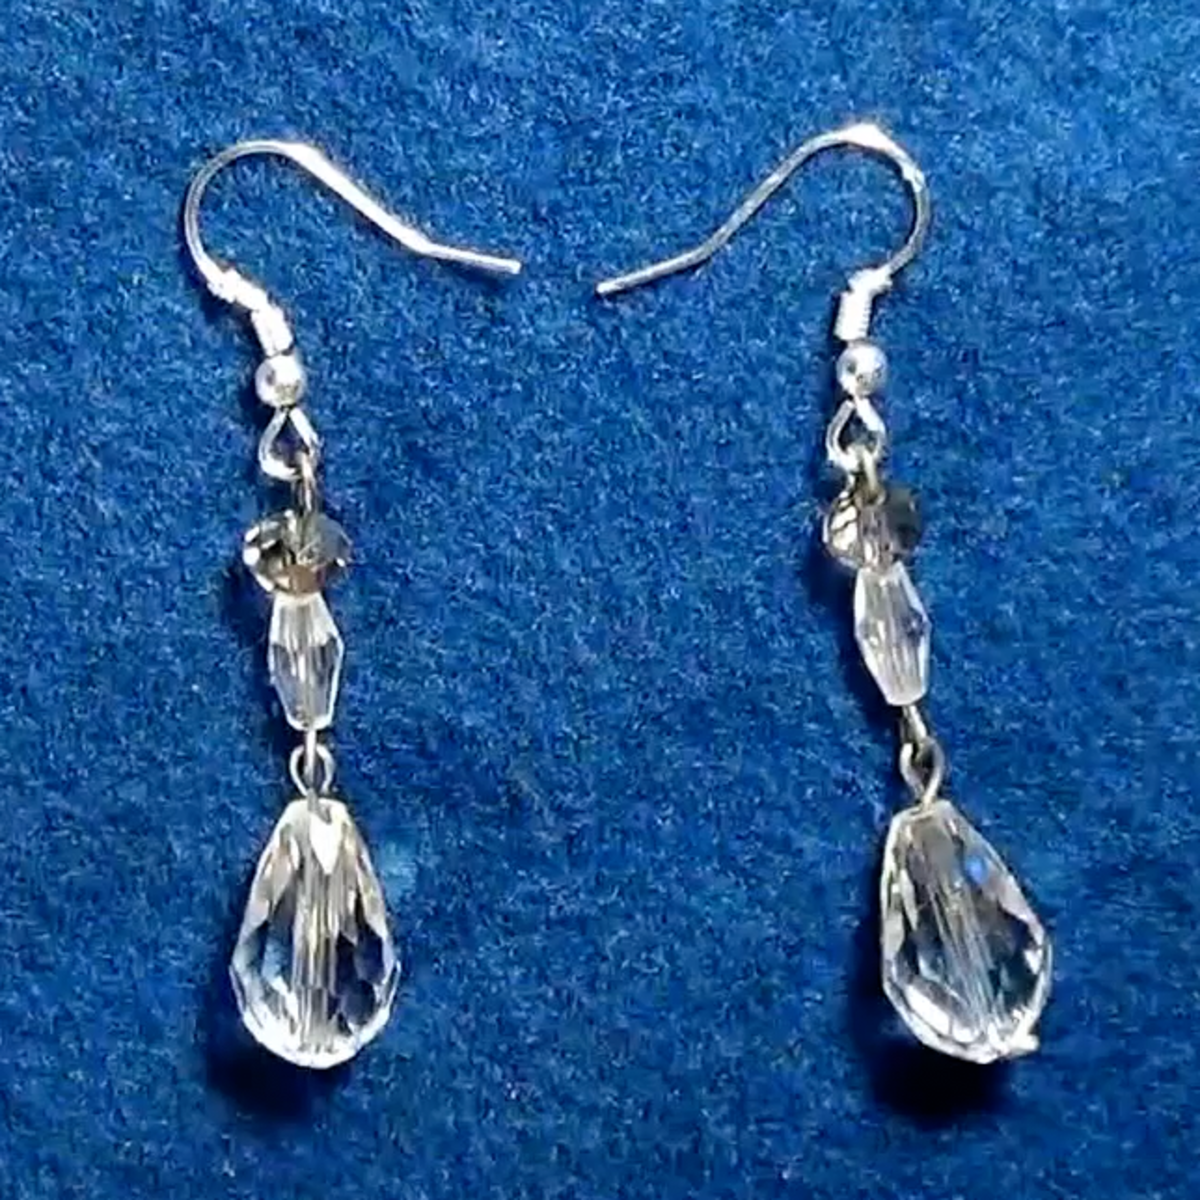 Learn How to Make a Pair of Handmade Crystal Wedding Earrings